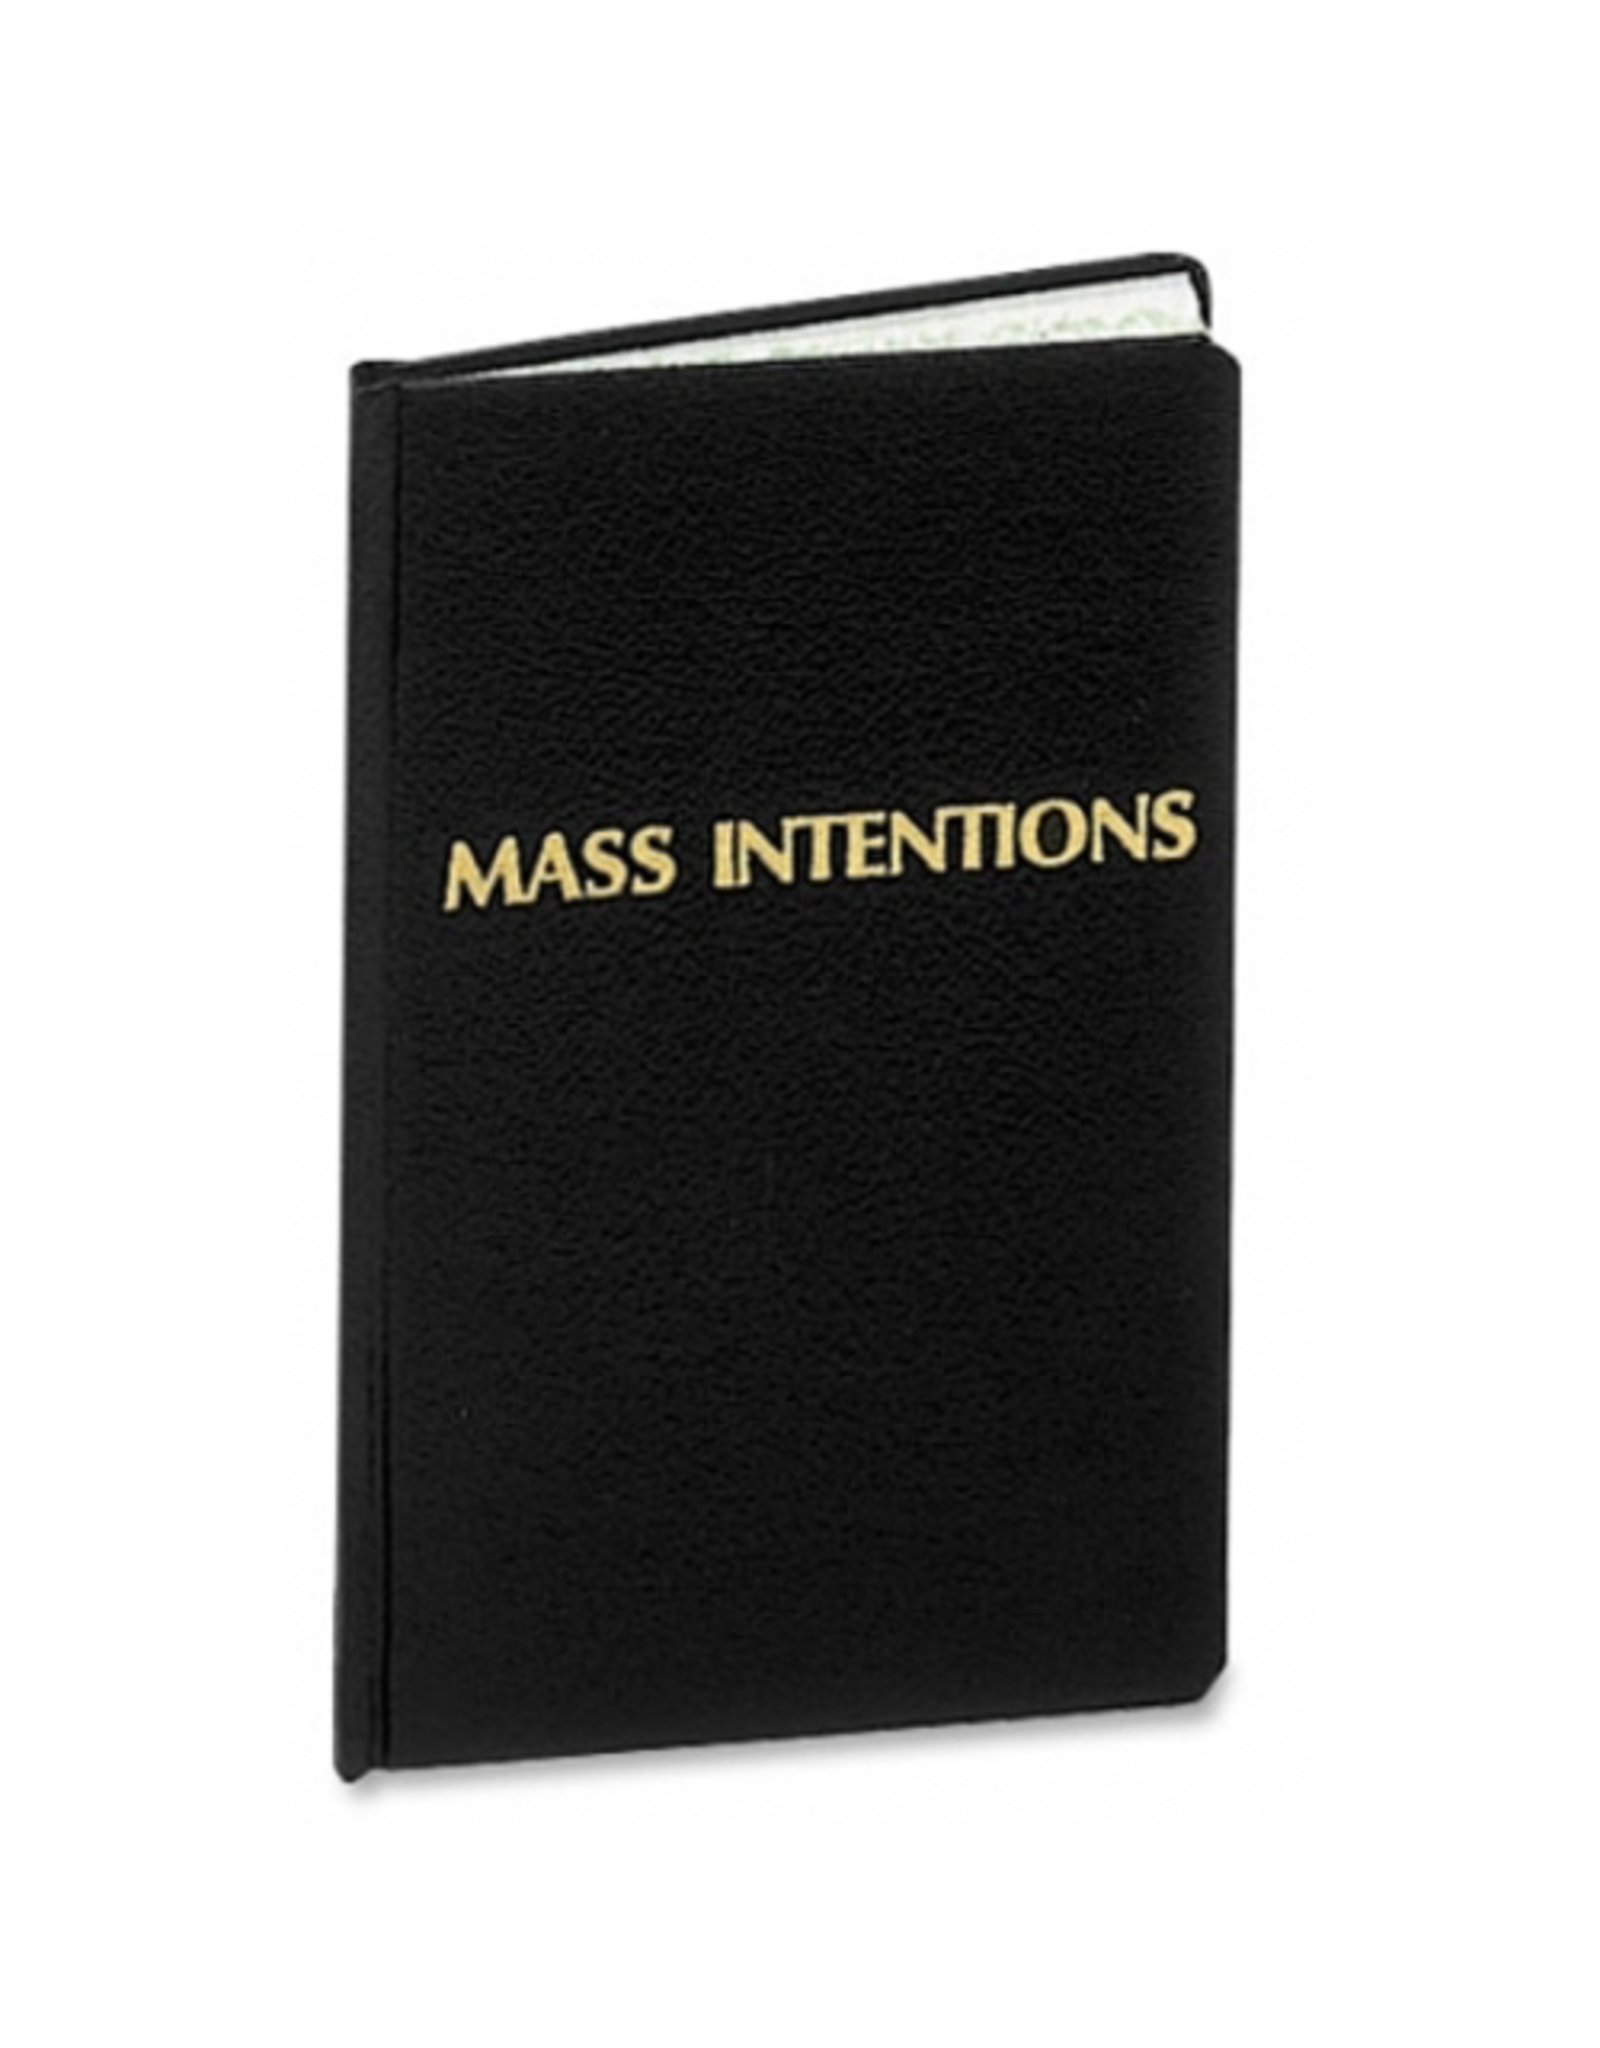 Remey, F.J. Register - Mass Intentions - 2500 Entries